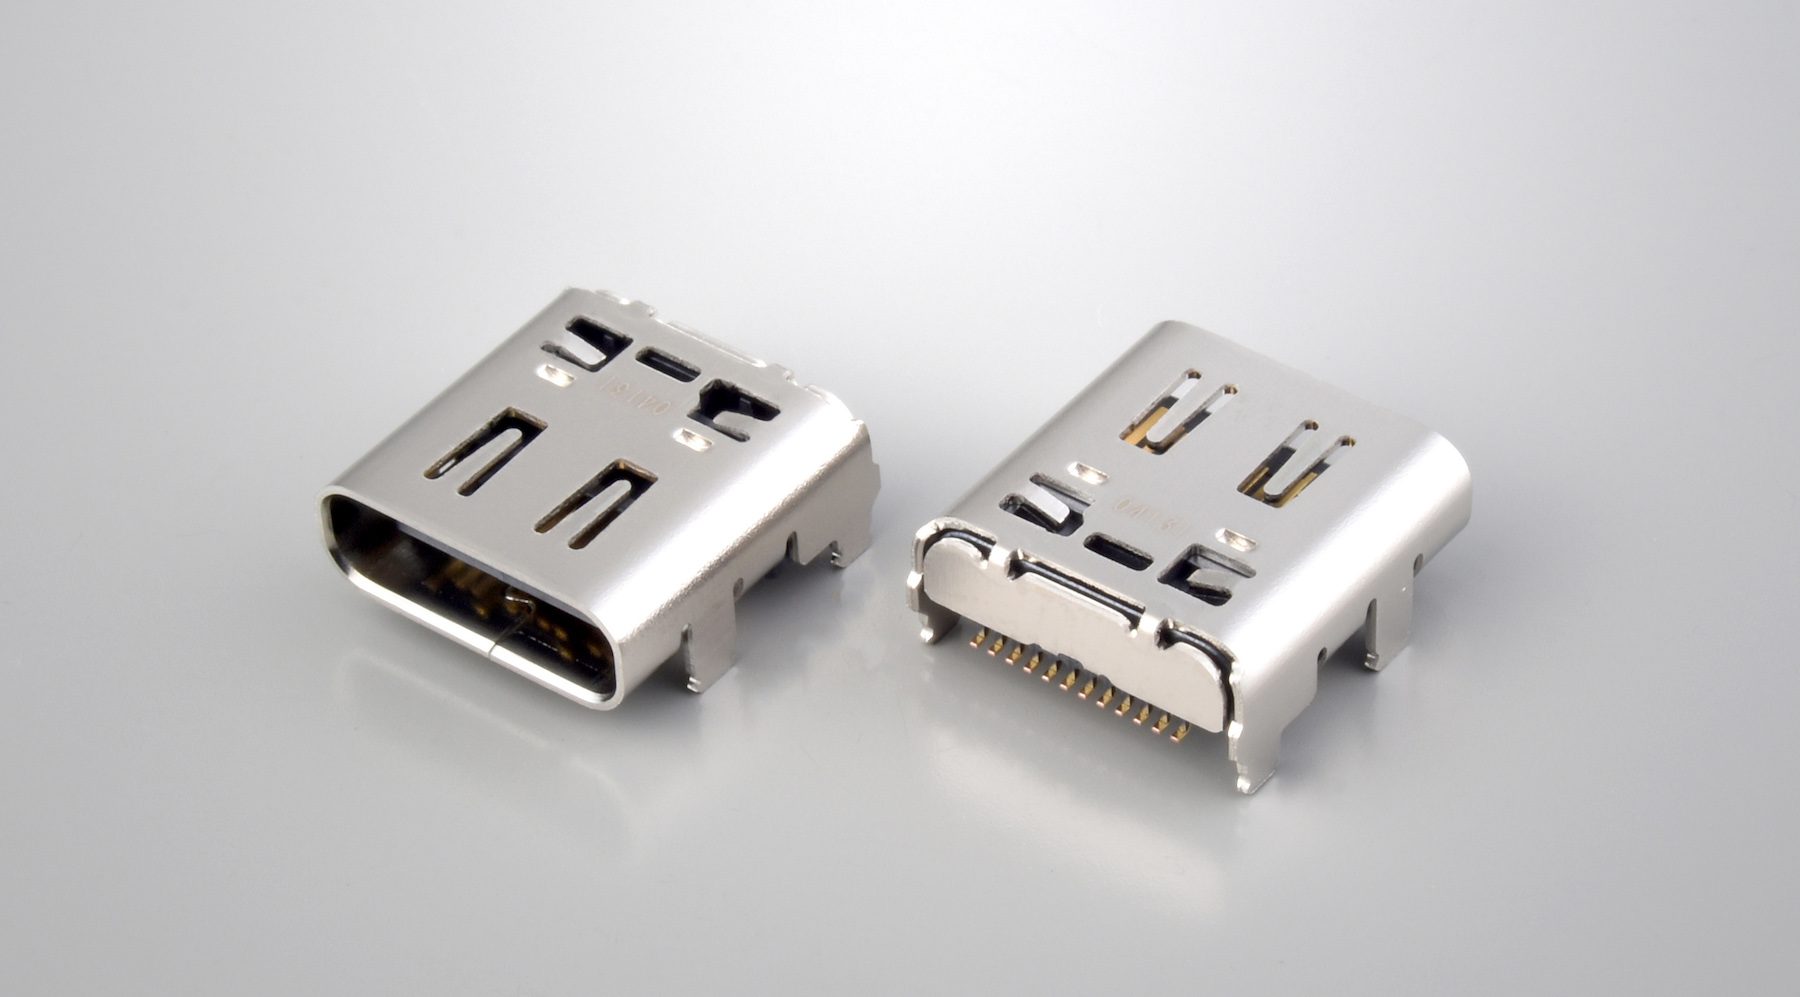 JAE’s USB Type-C receptacle connecto